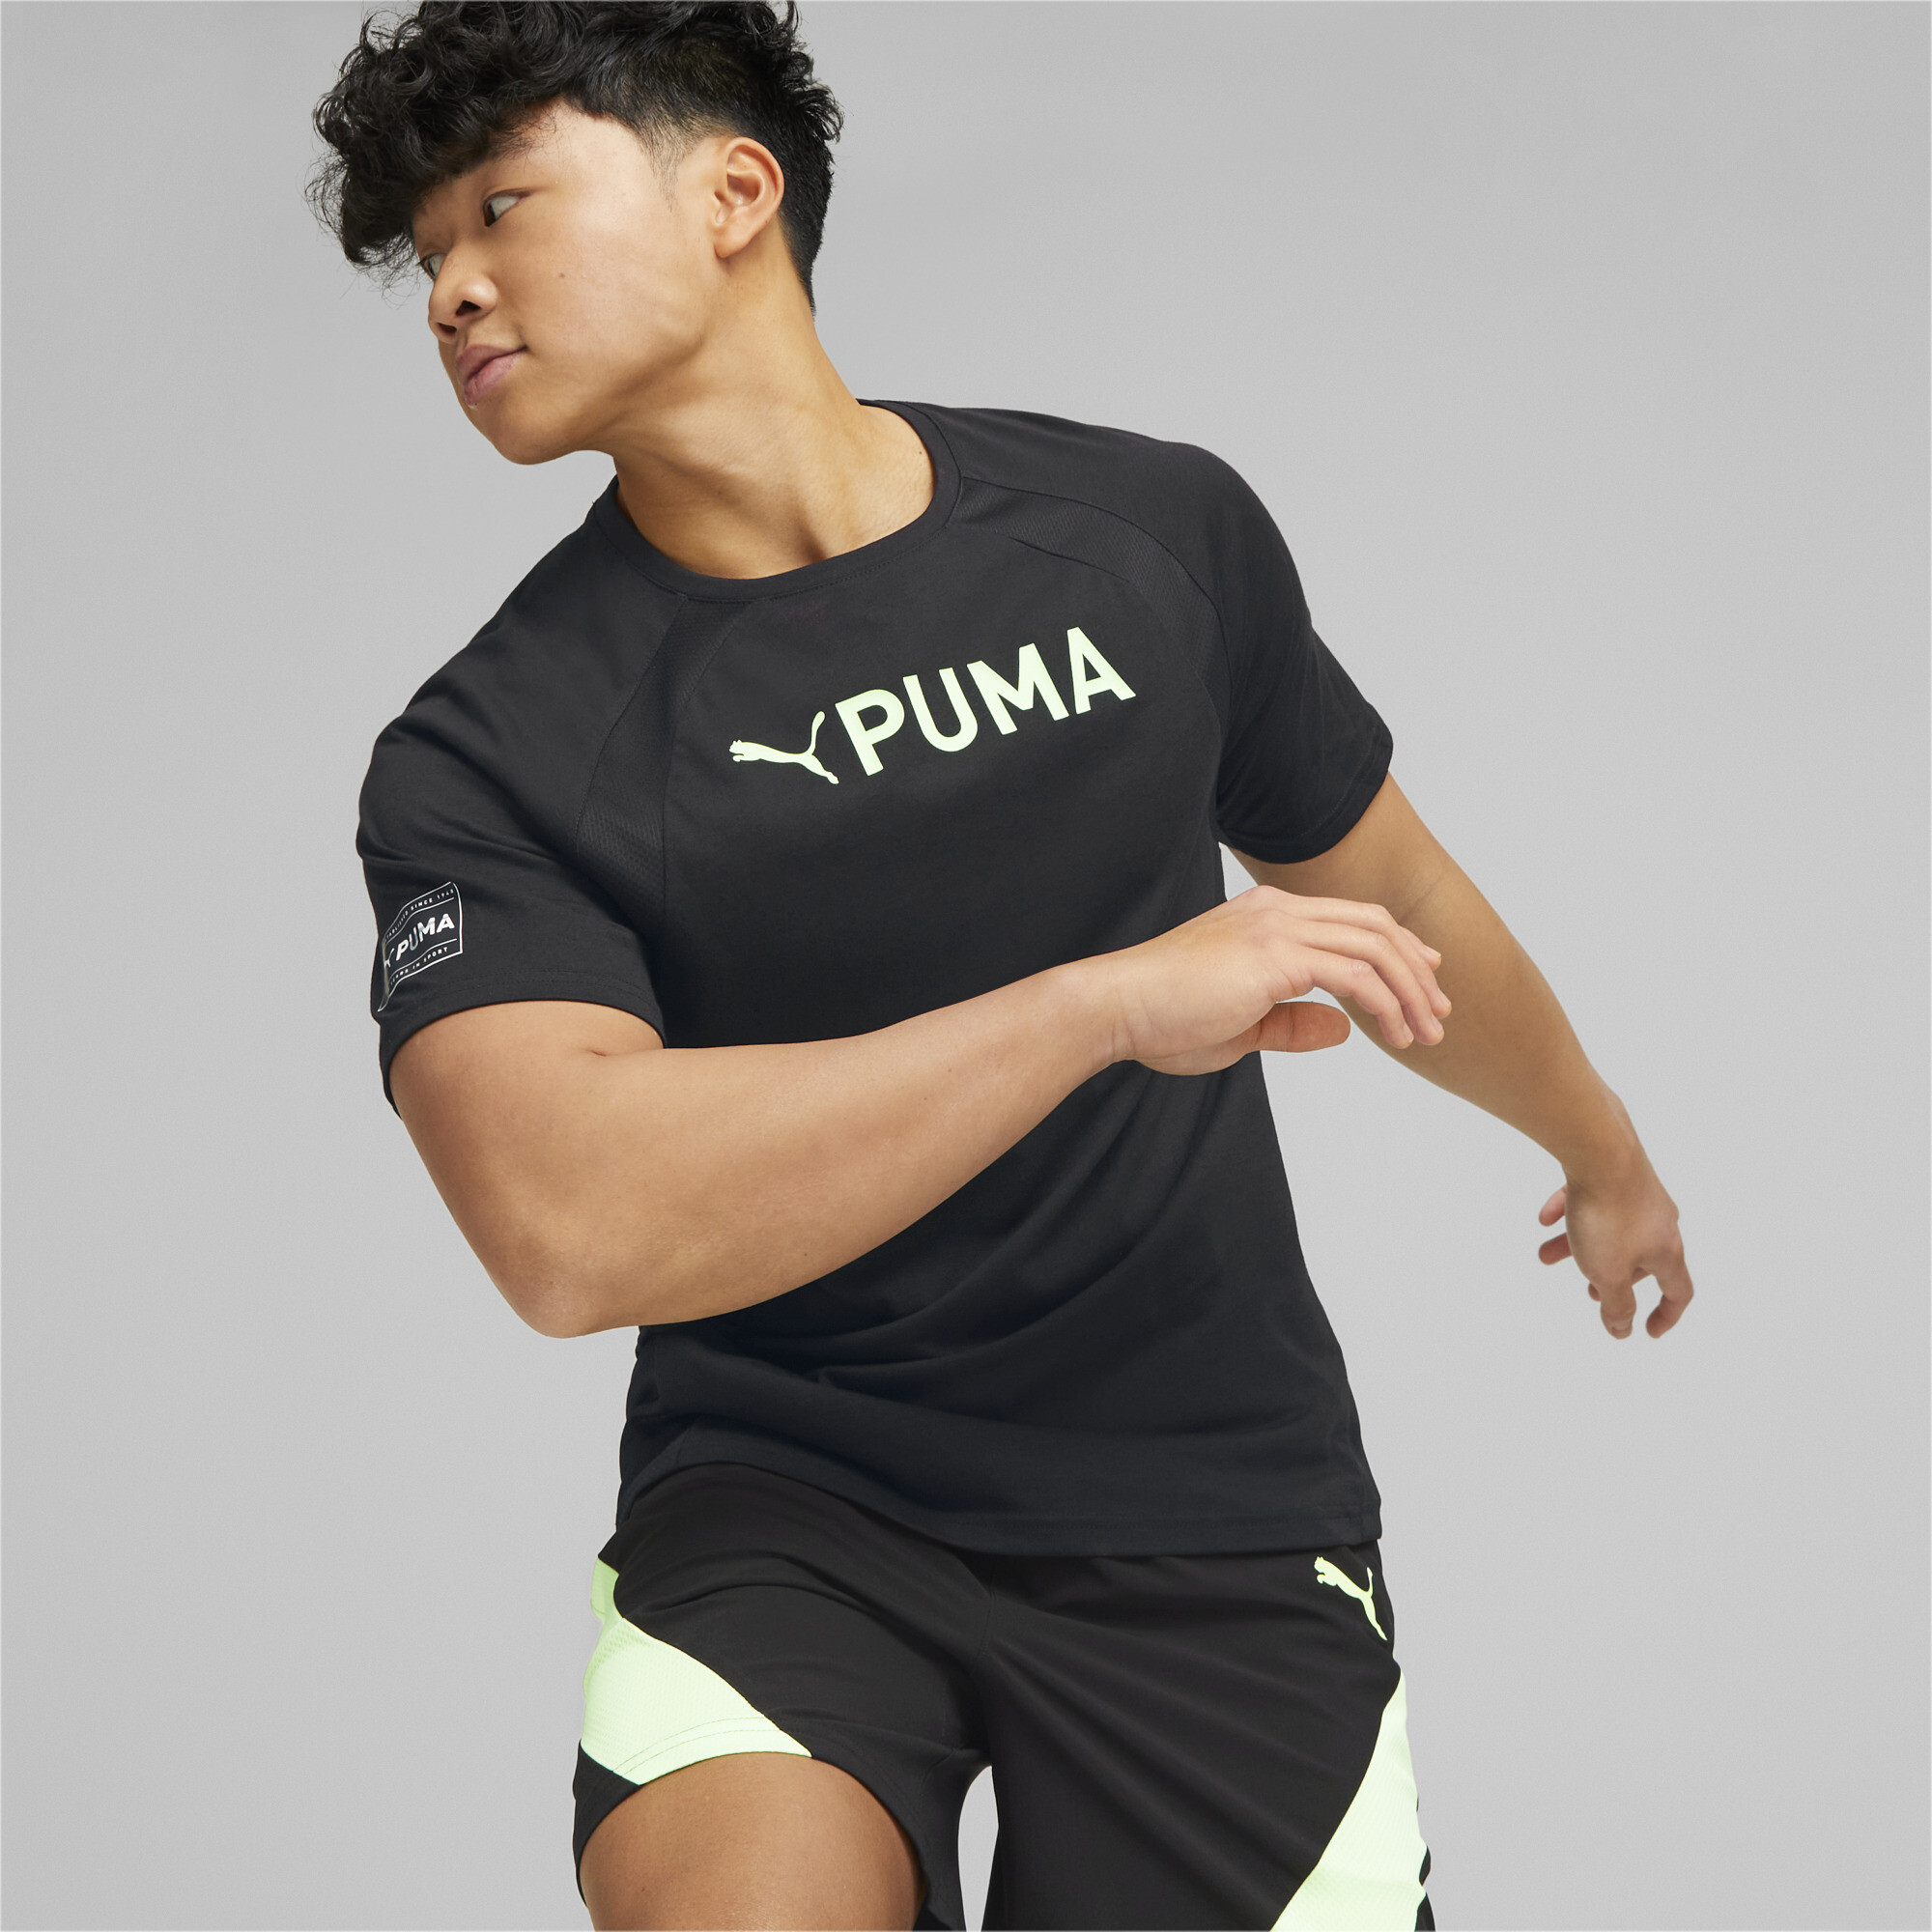 Men's PUMA Fit Ultrabreathe Triblend Training T-Shirt Men In Black, Size Small